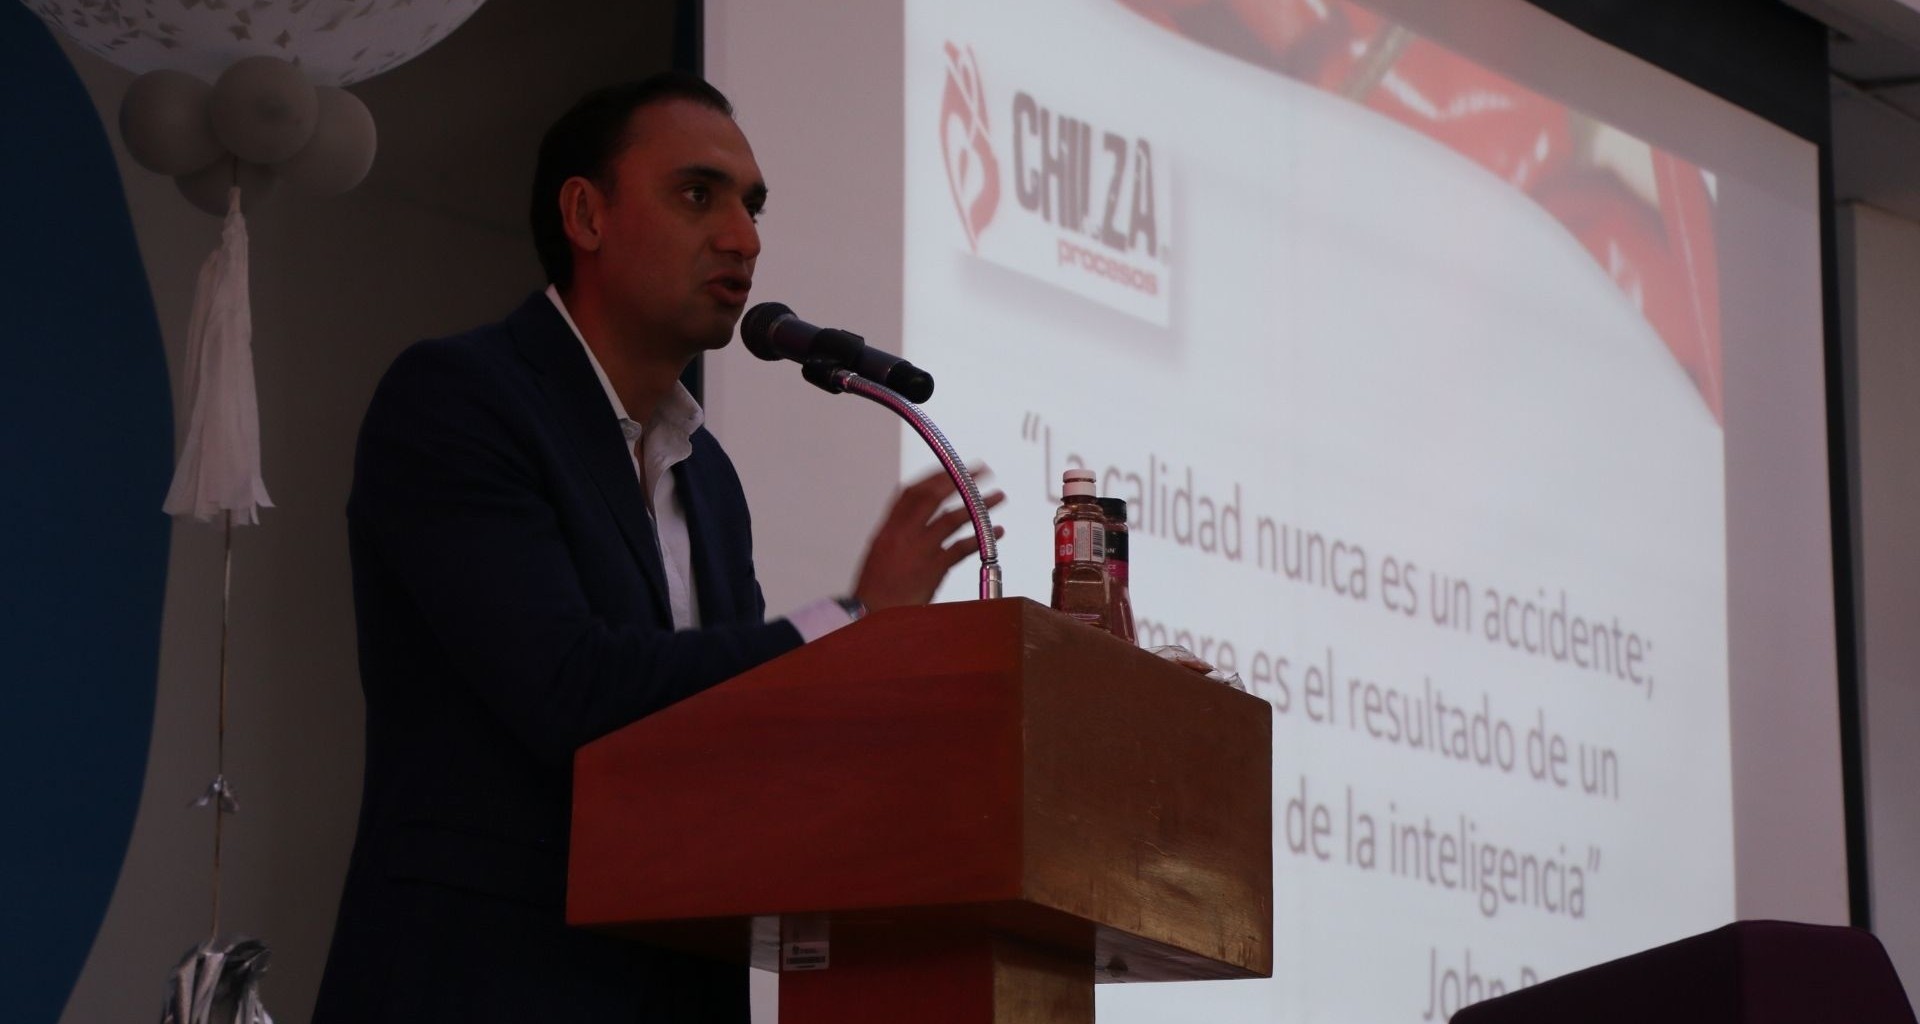 Héctor Jaramillo zacatecano que lidera Chilza, empresa de apoyo agronómico 